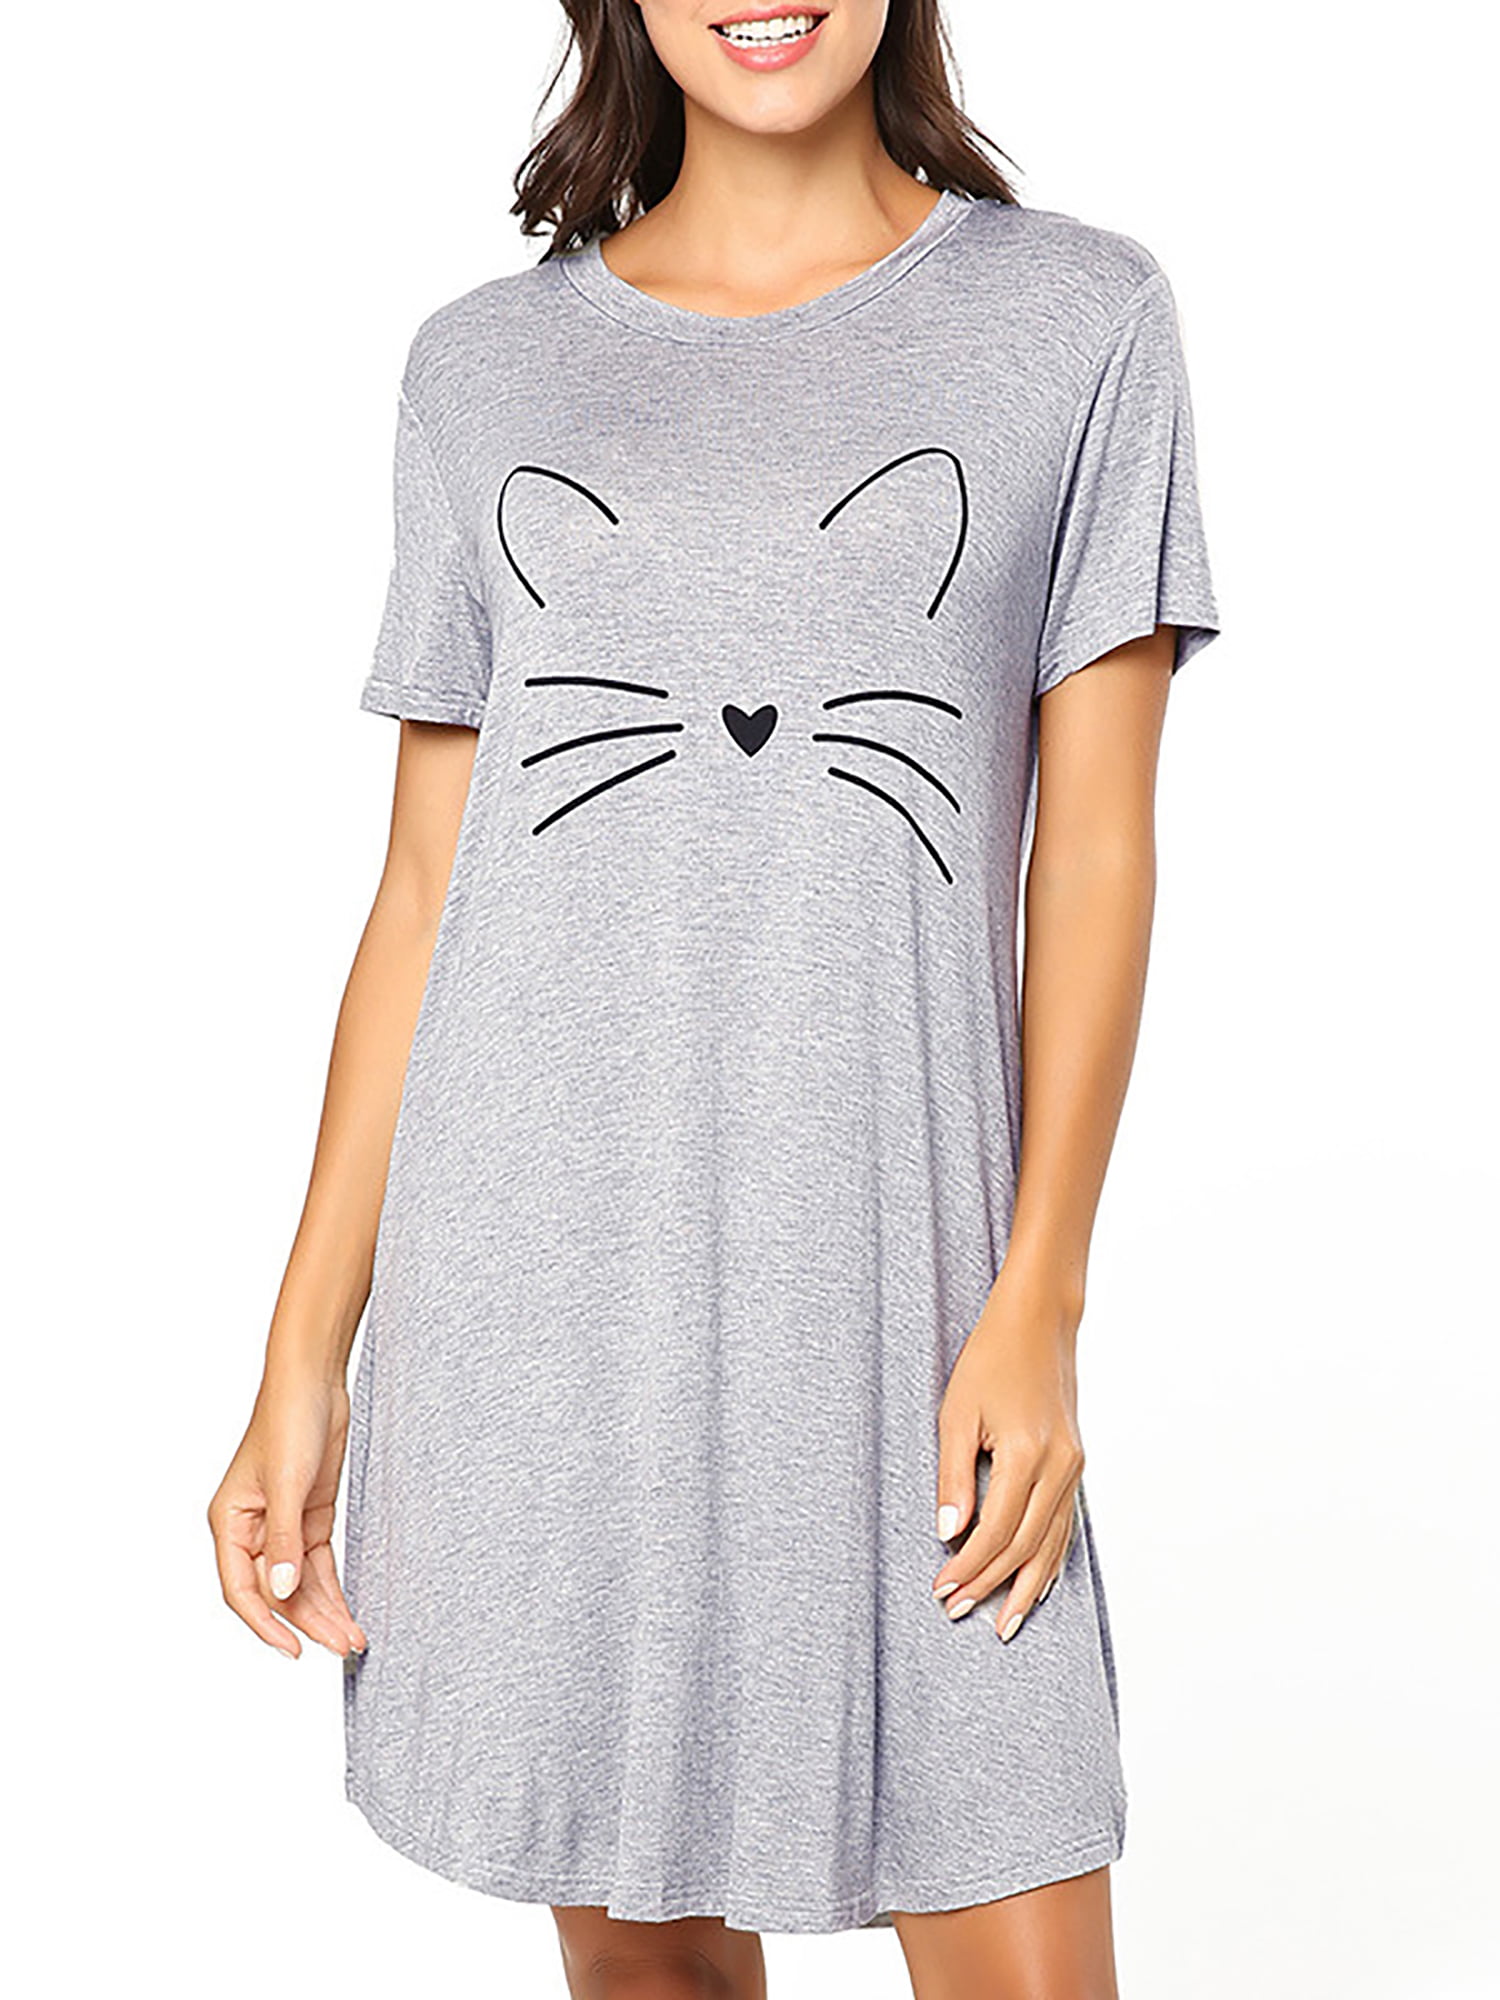 Selfieee - Selfieee Nightgown Womens Cotton Night Shirt For Sleeping